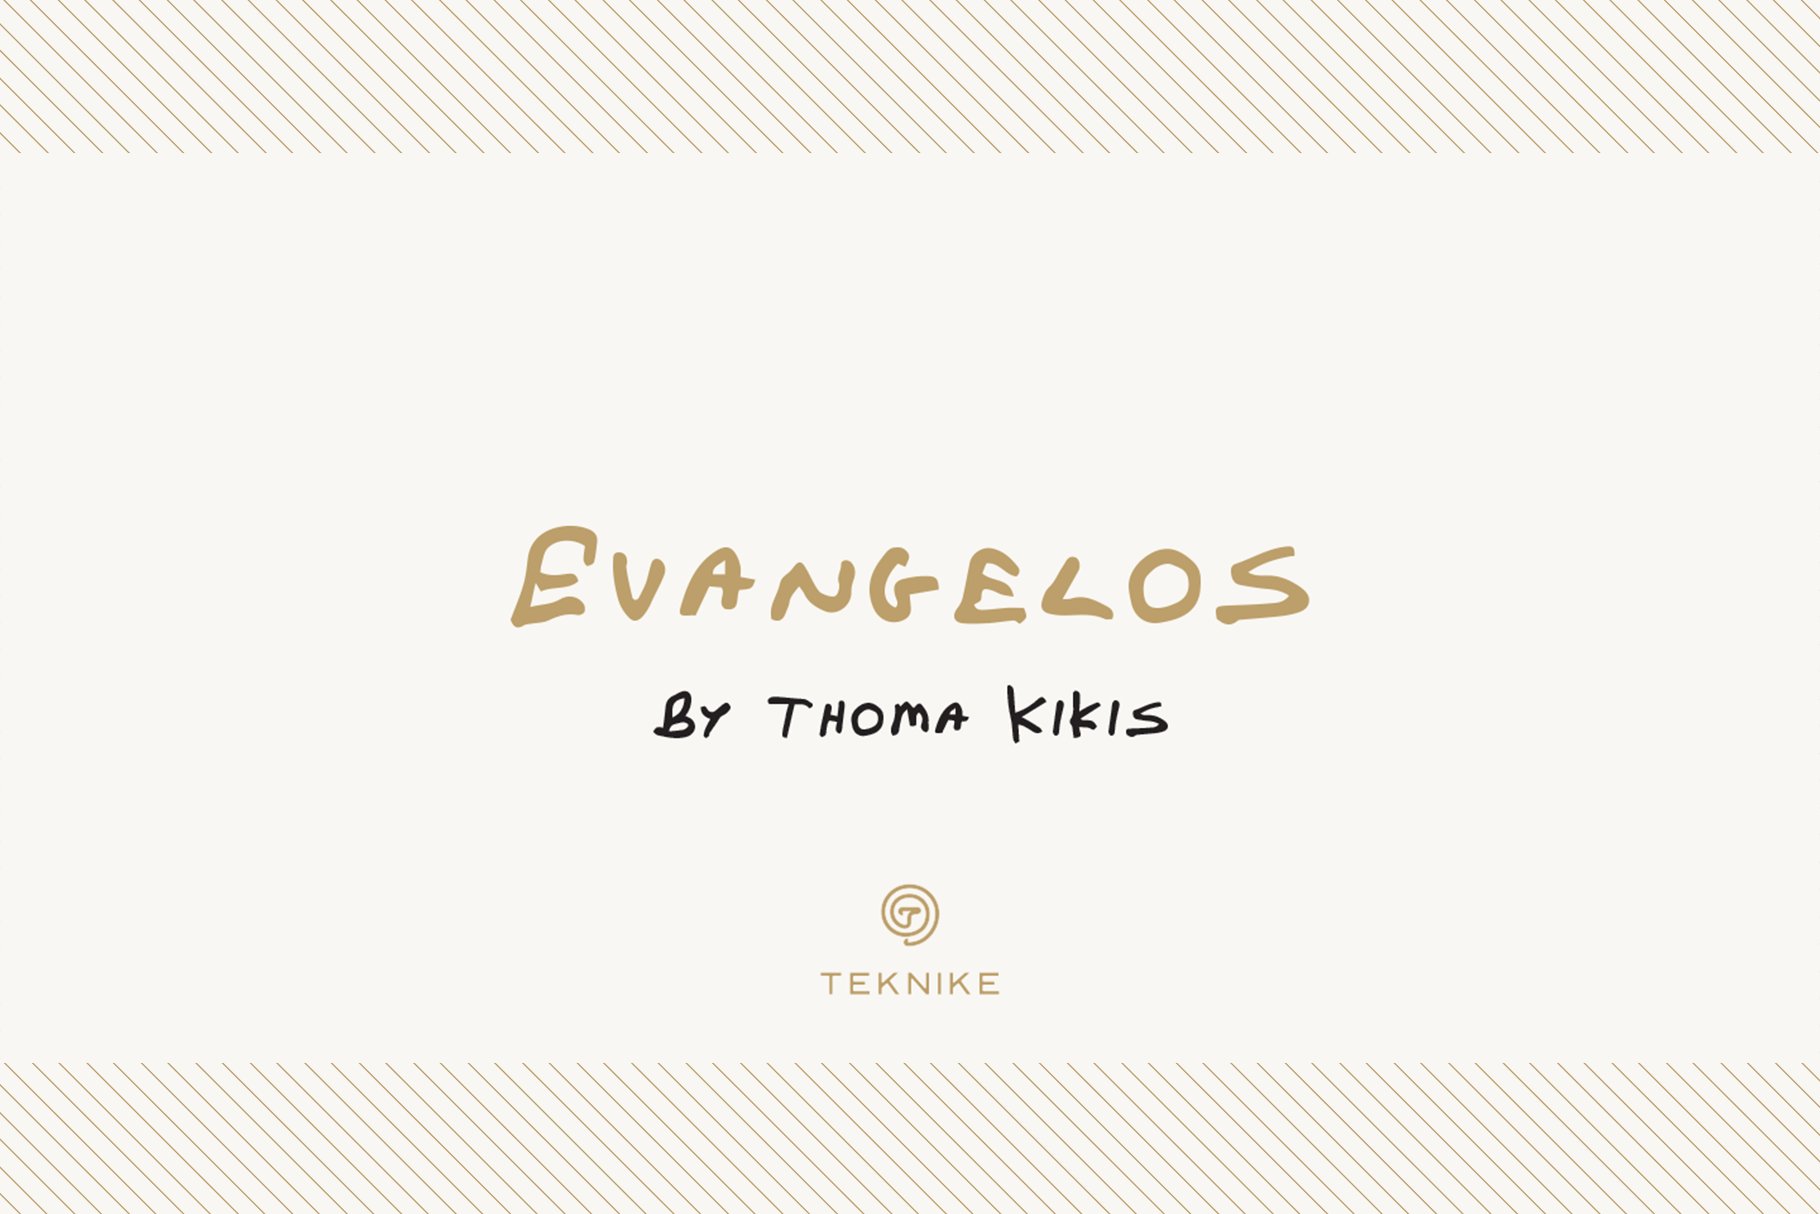 Evangelos cover image.